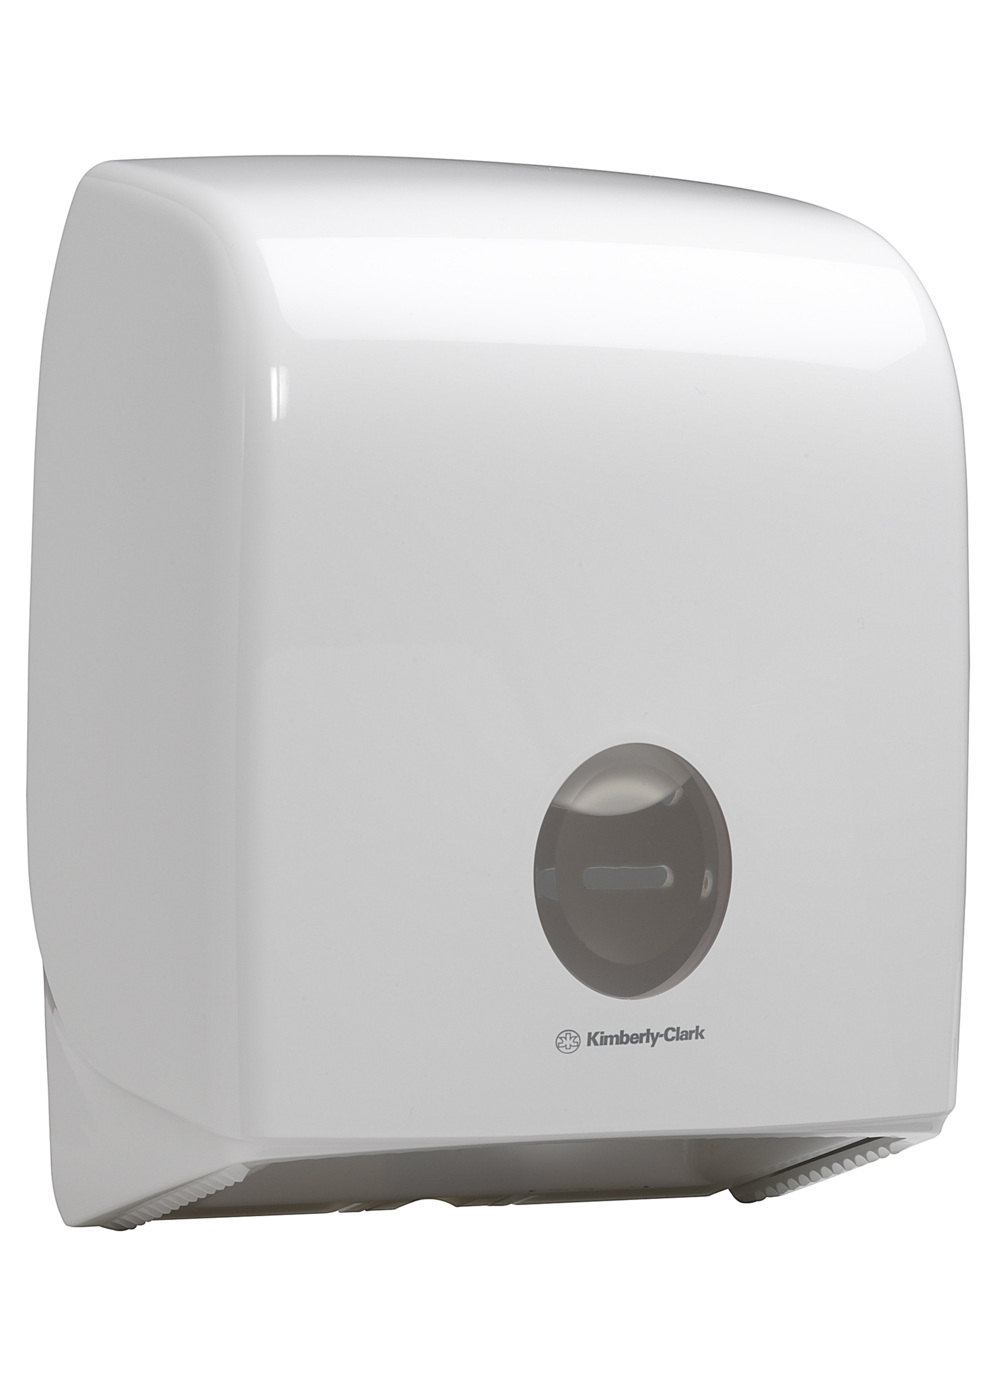 Aquarius™ Single Mini Jumbo Toilettenpapierspender 6958 – White - 6958